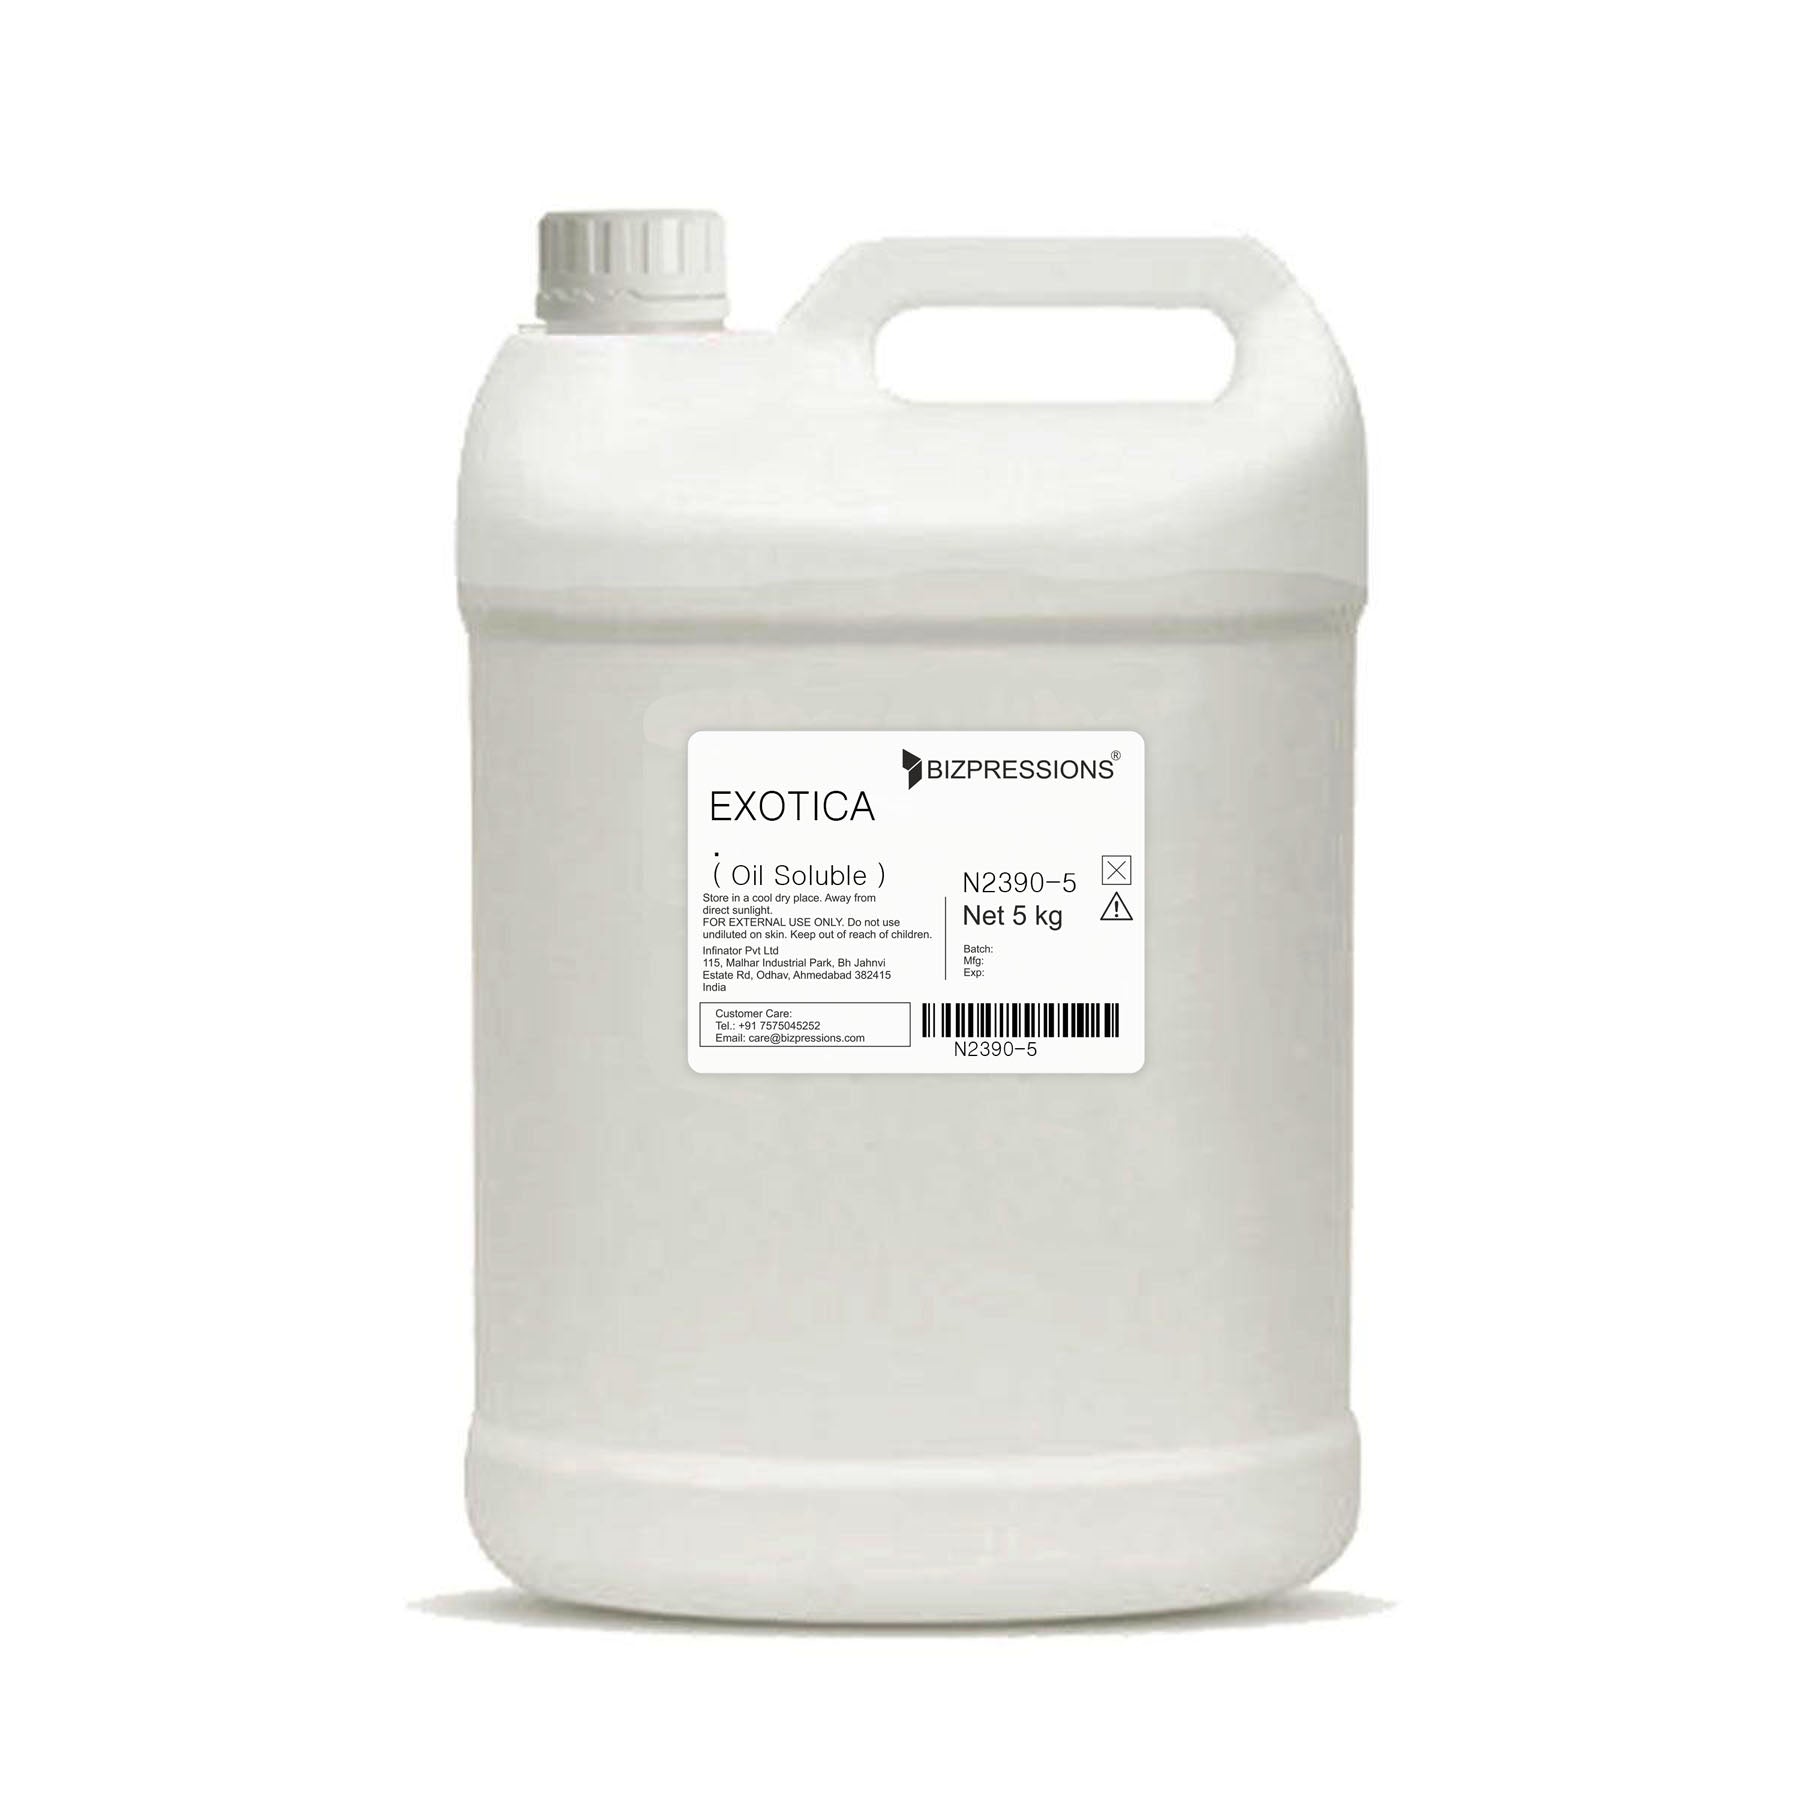 EXOTICA - Fragrance ( Oil Soluble ) - 5 kg